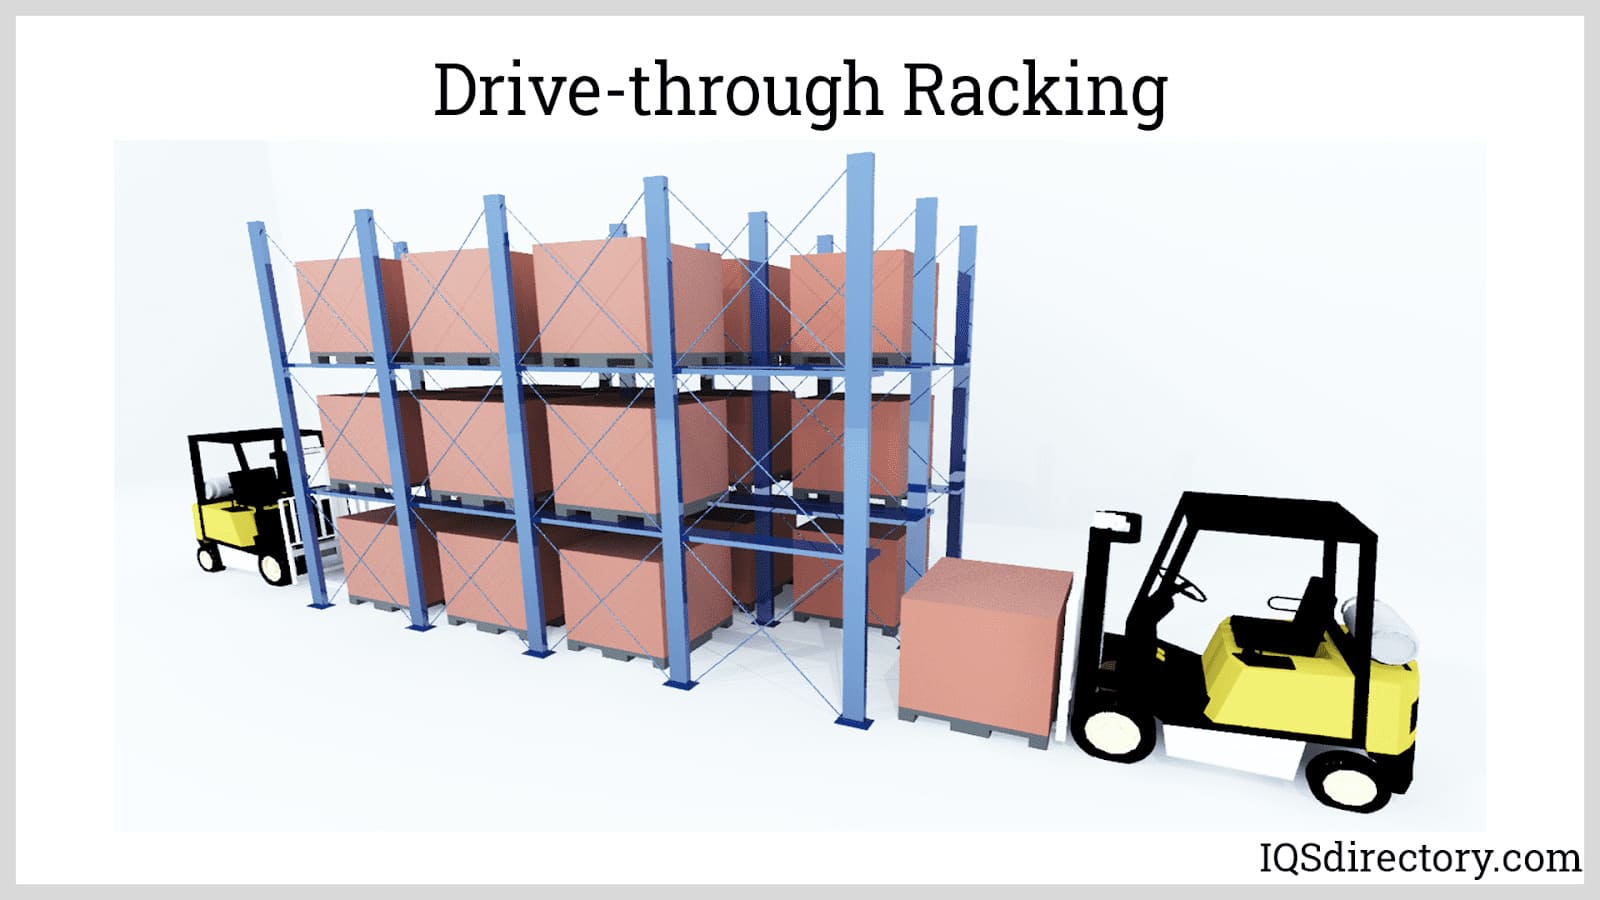 Drive-through Racking